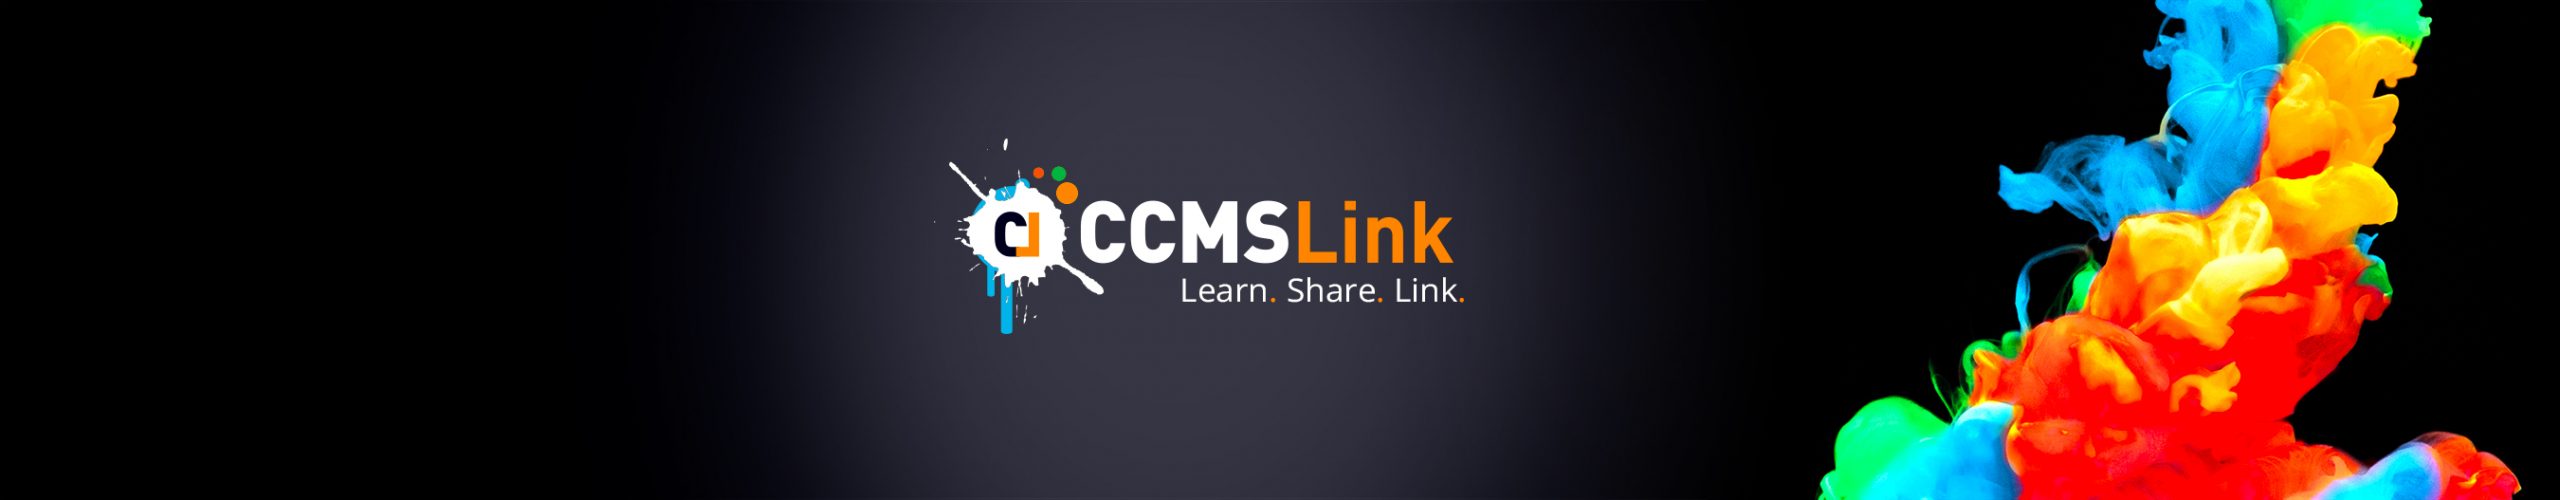 CCMS Link banner